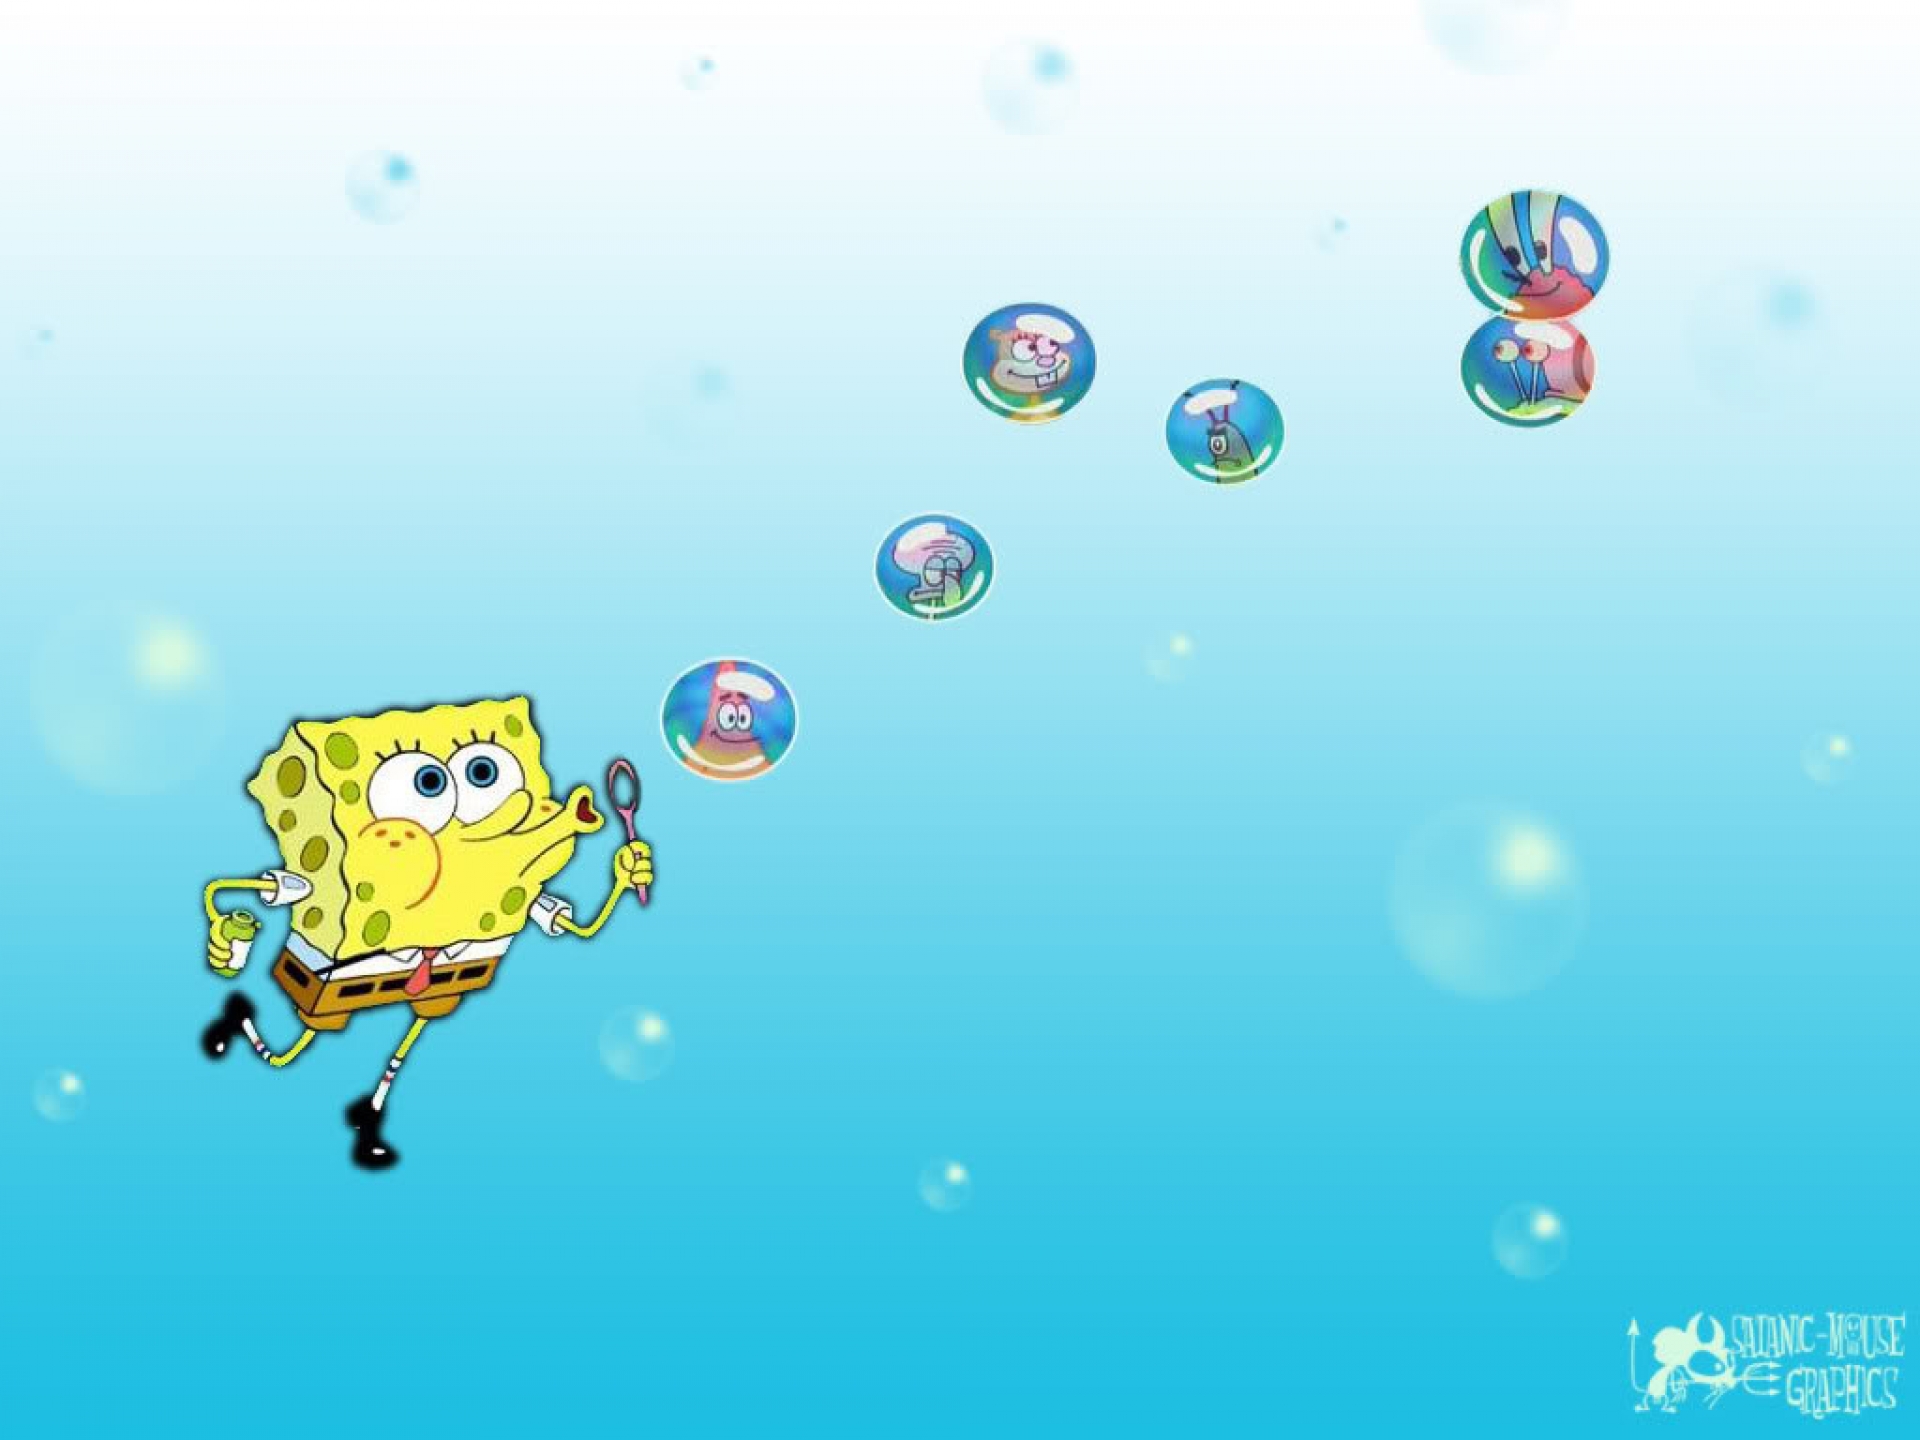 Spongebob Background Pictures Image